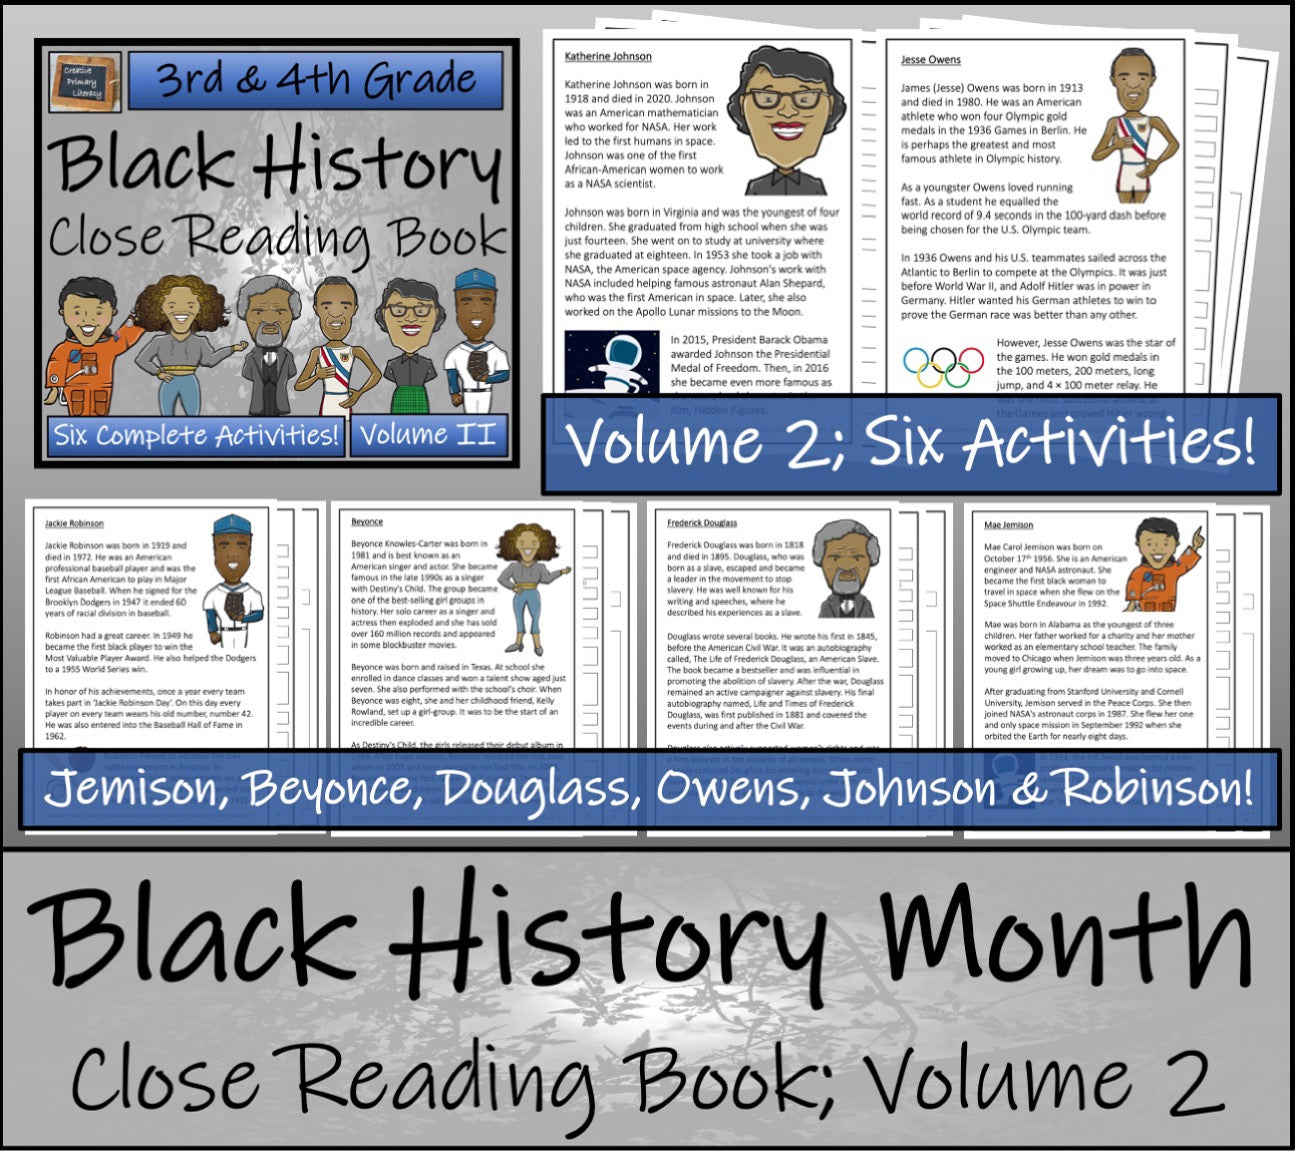 Black History Close Reading Comprehension Books 1 to 4 | 3rd Grade & 4th Grade